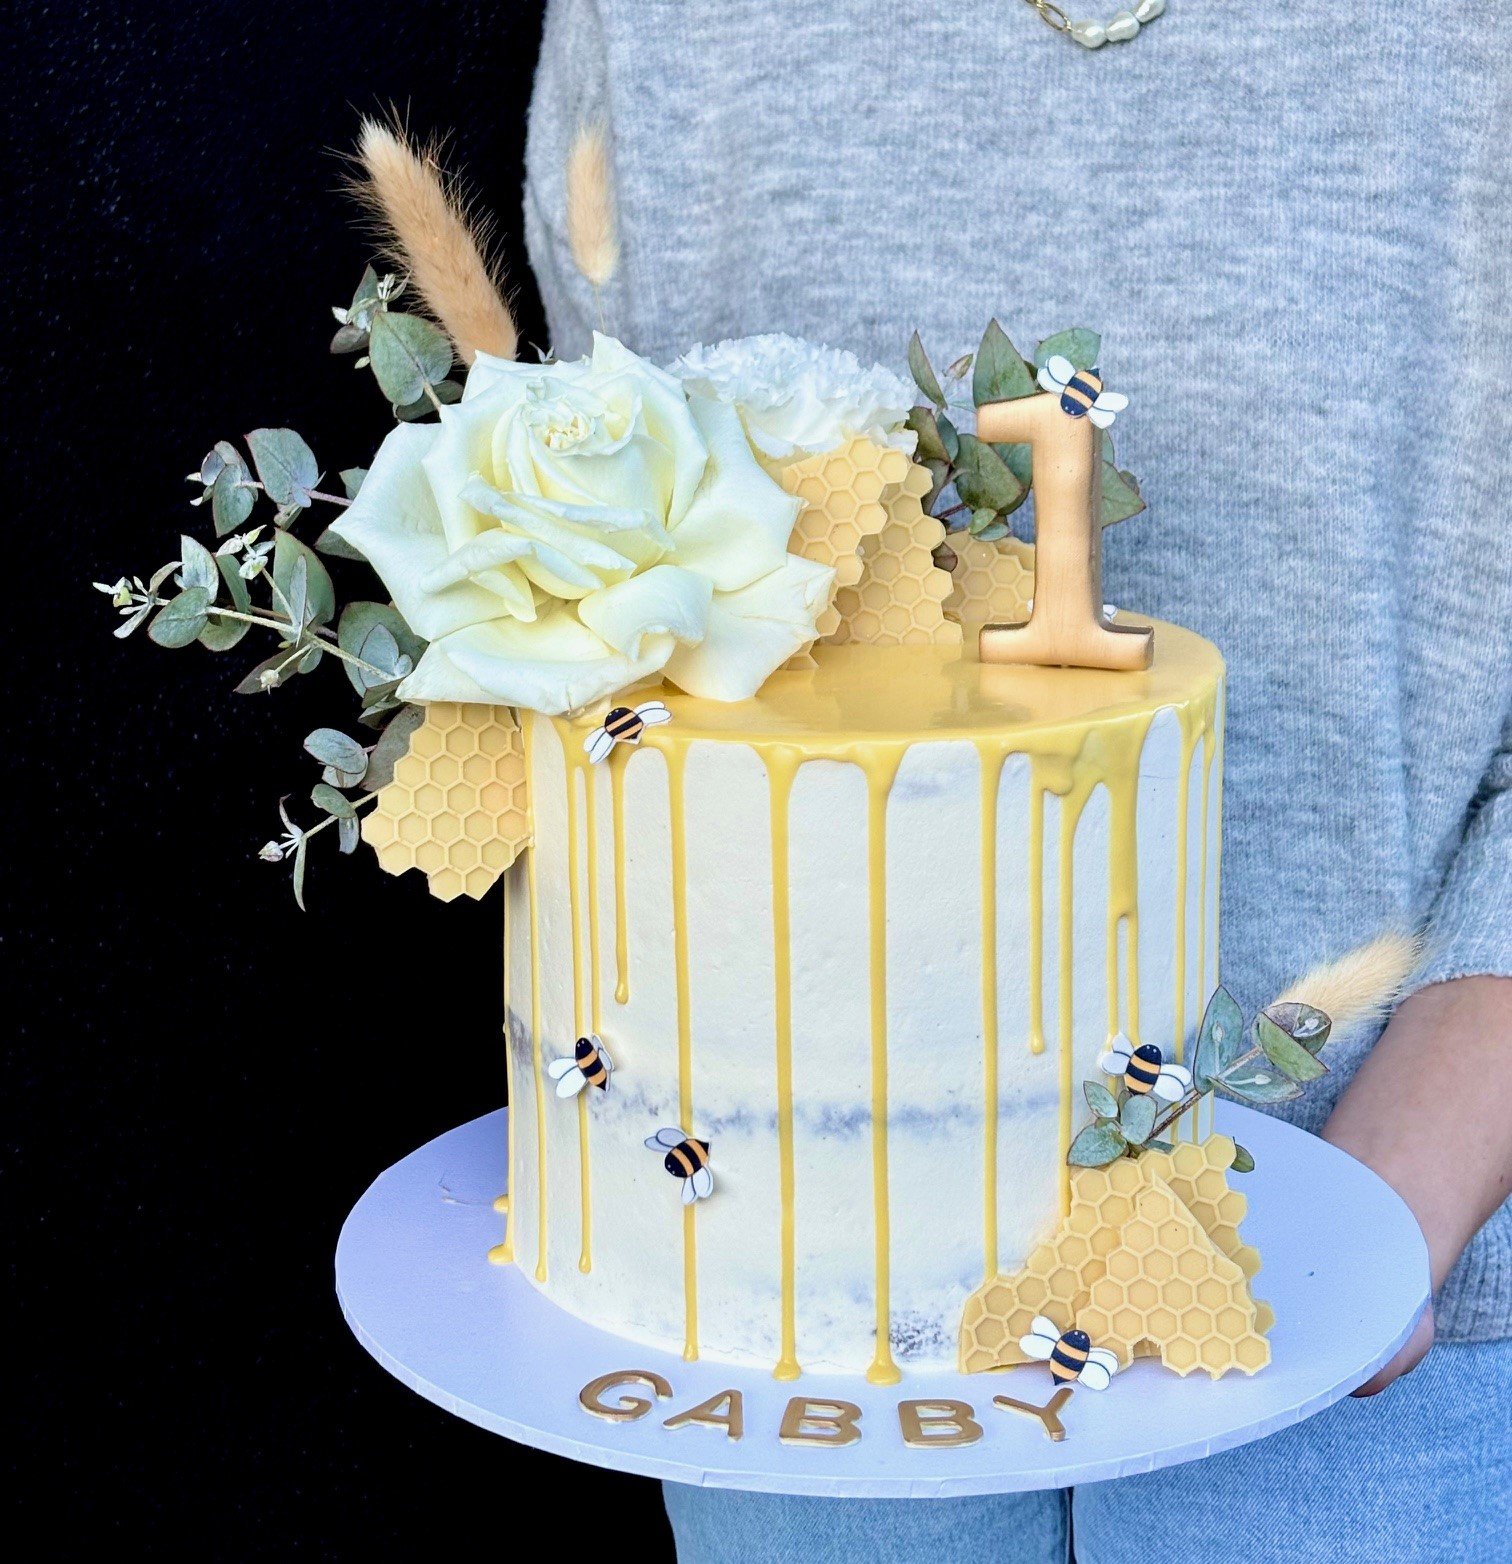 vanillapodspecialtycakes-honeybeecake-firstbirthdaycake-brisbanecakes-buttercreamcake-honey-birthdaycake-brisbanebakery-cakedesigner.jpg